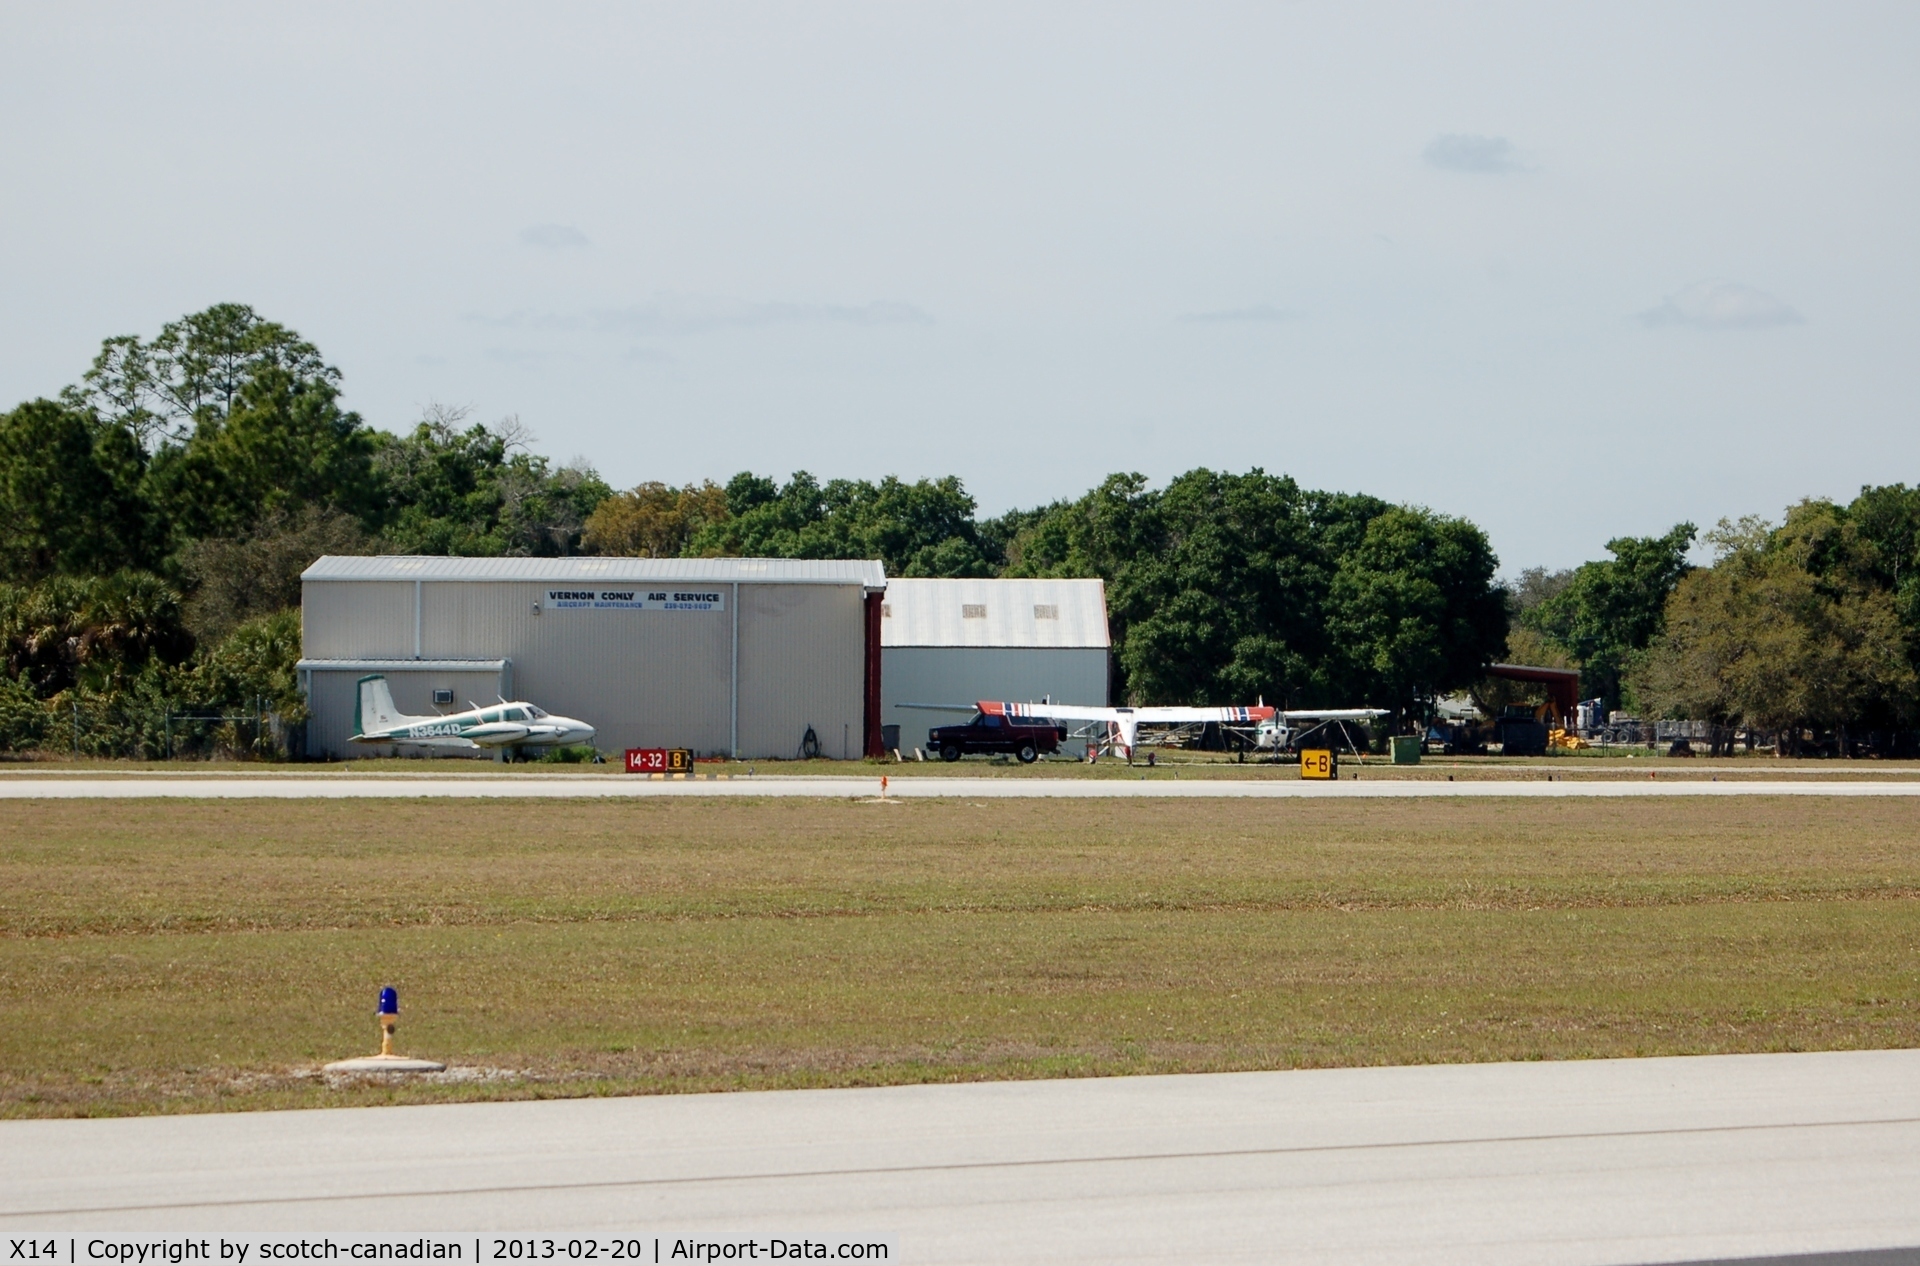 La Belle Municipal Airport (X14) - Vernon Conly Air Service at La Belle Municipal Airport, La Belle, FL 